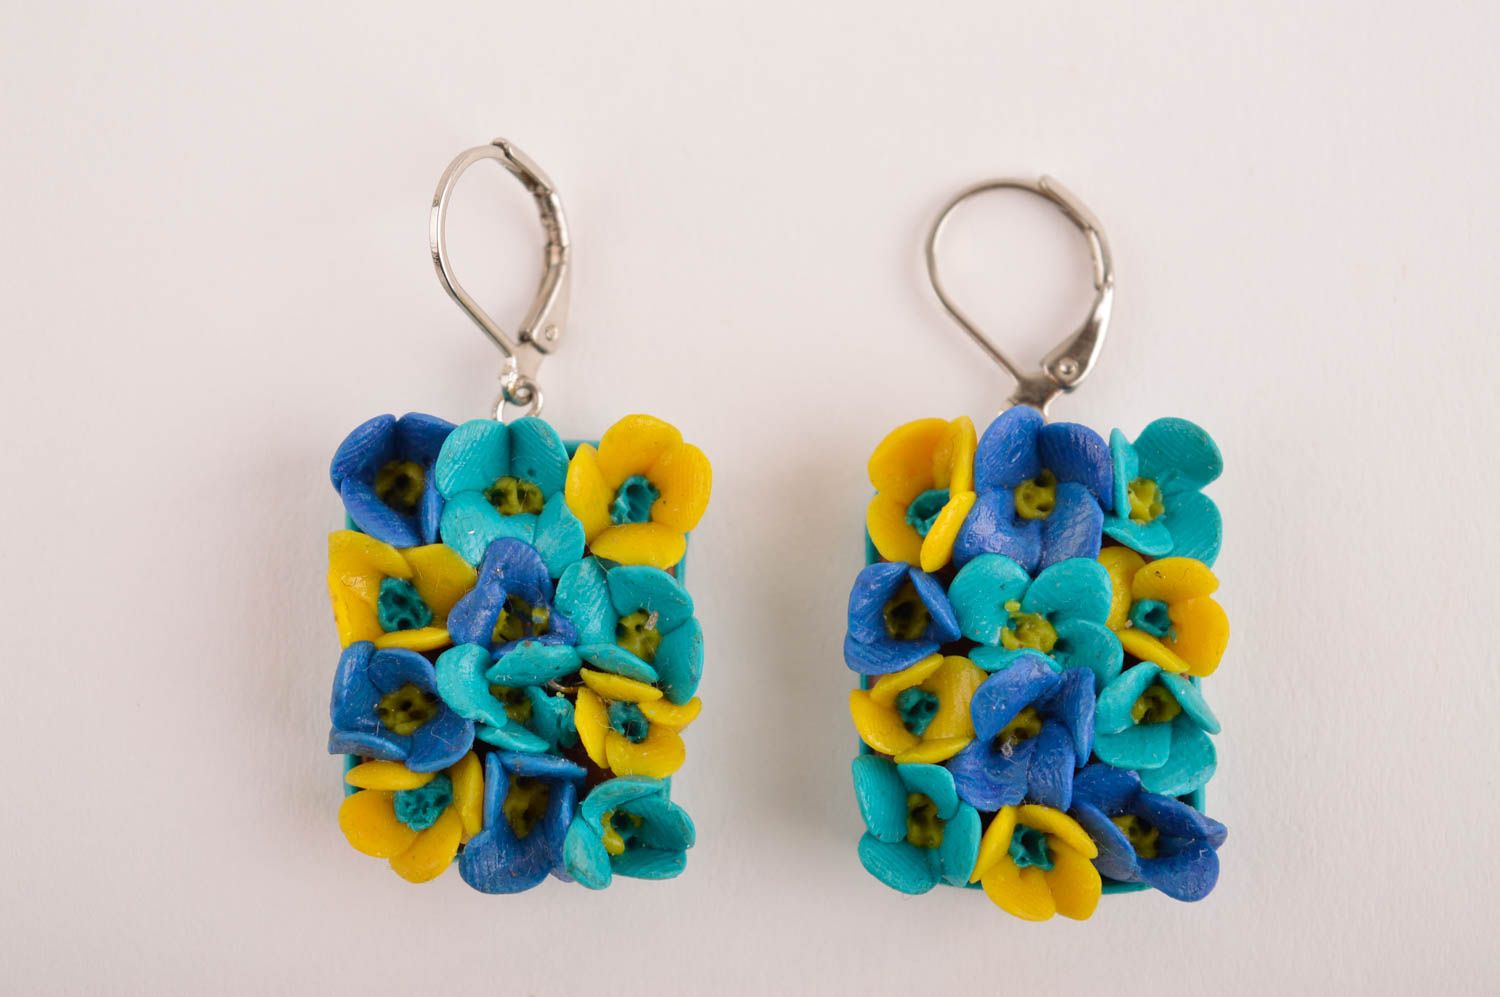 Handmade earrings designer clay earrings flowers earrings for women gift ideas photo 3